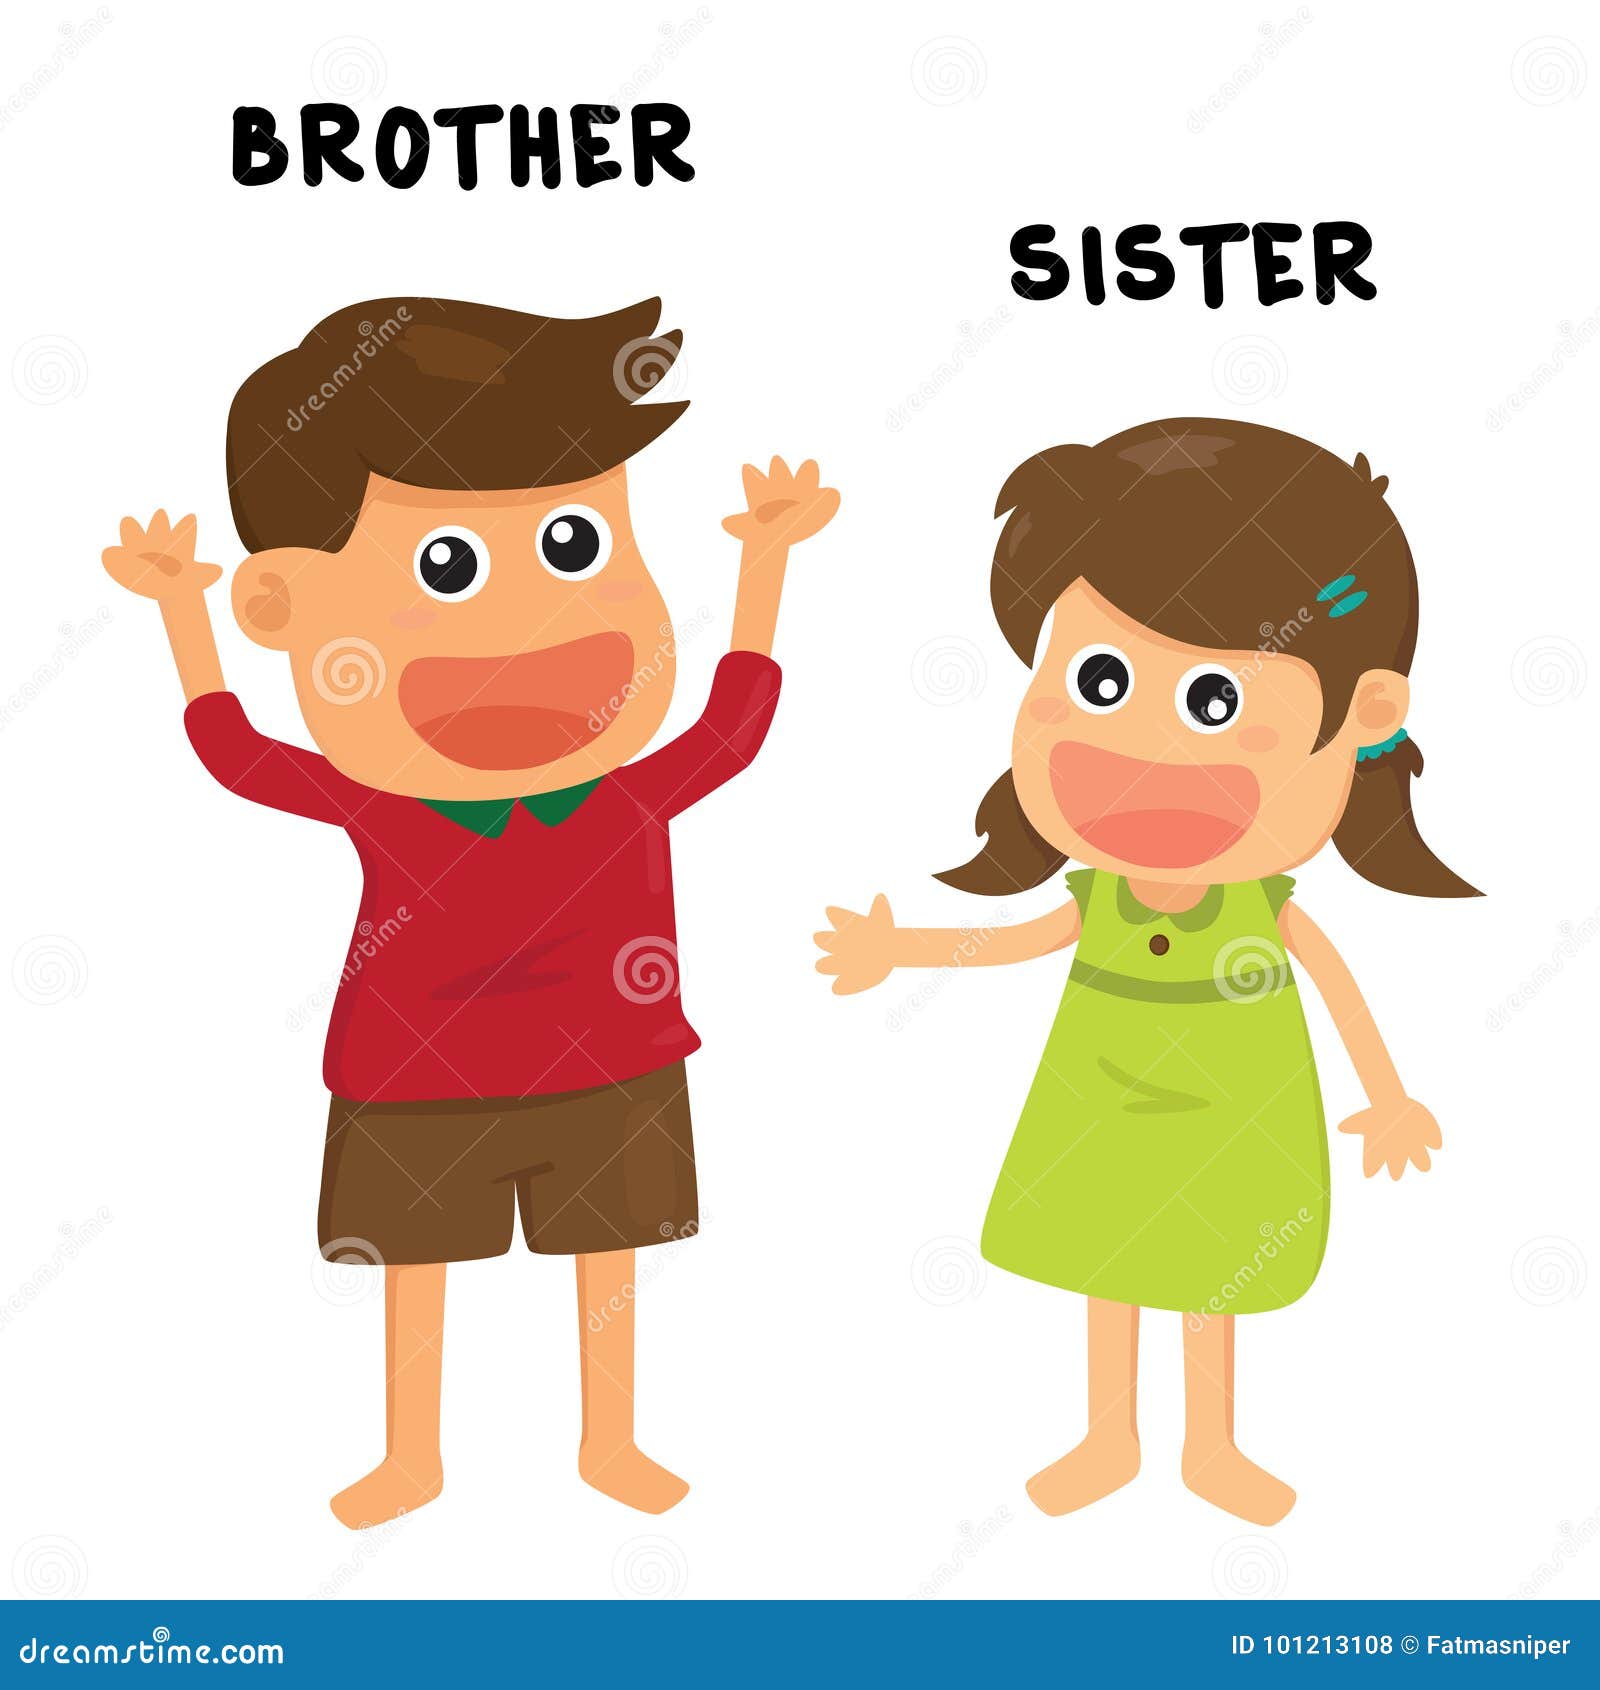 Brother sister family stock illustration. Illustration of green ...